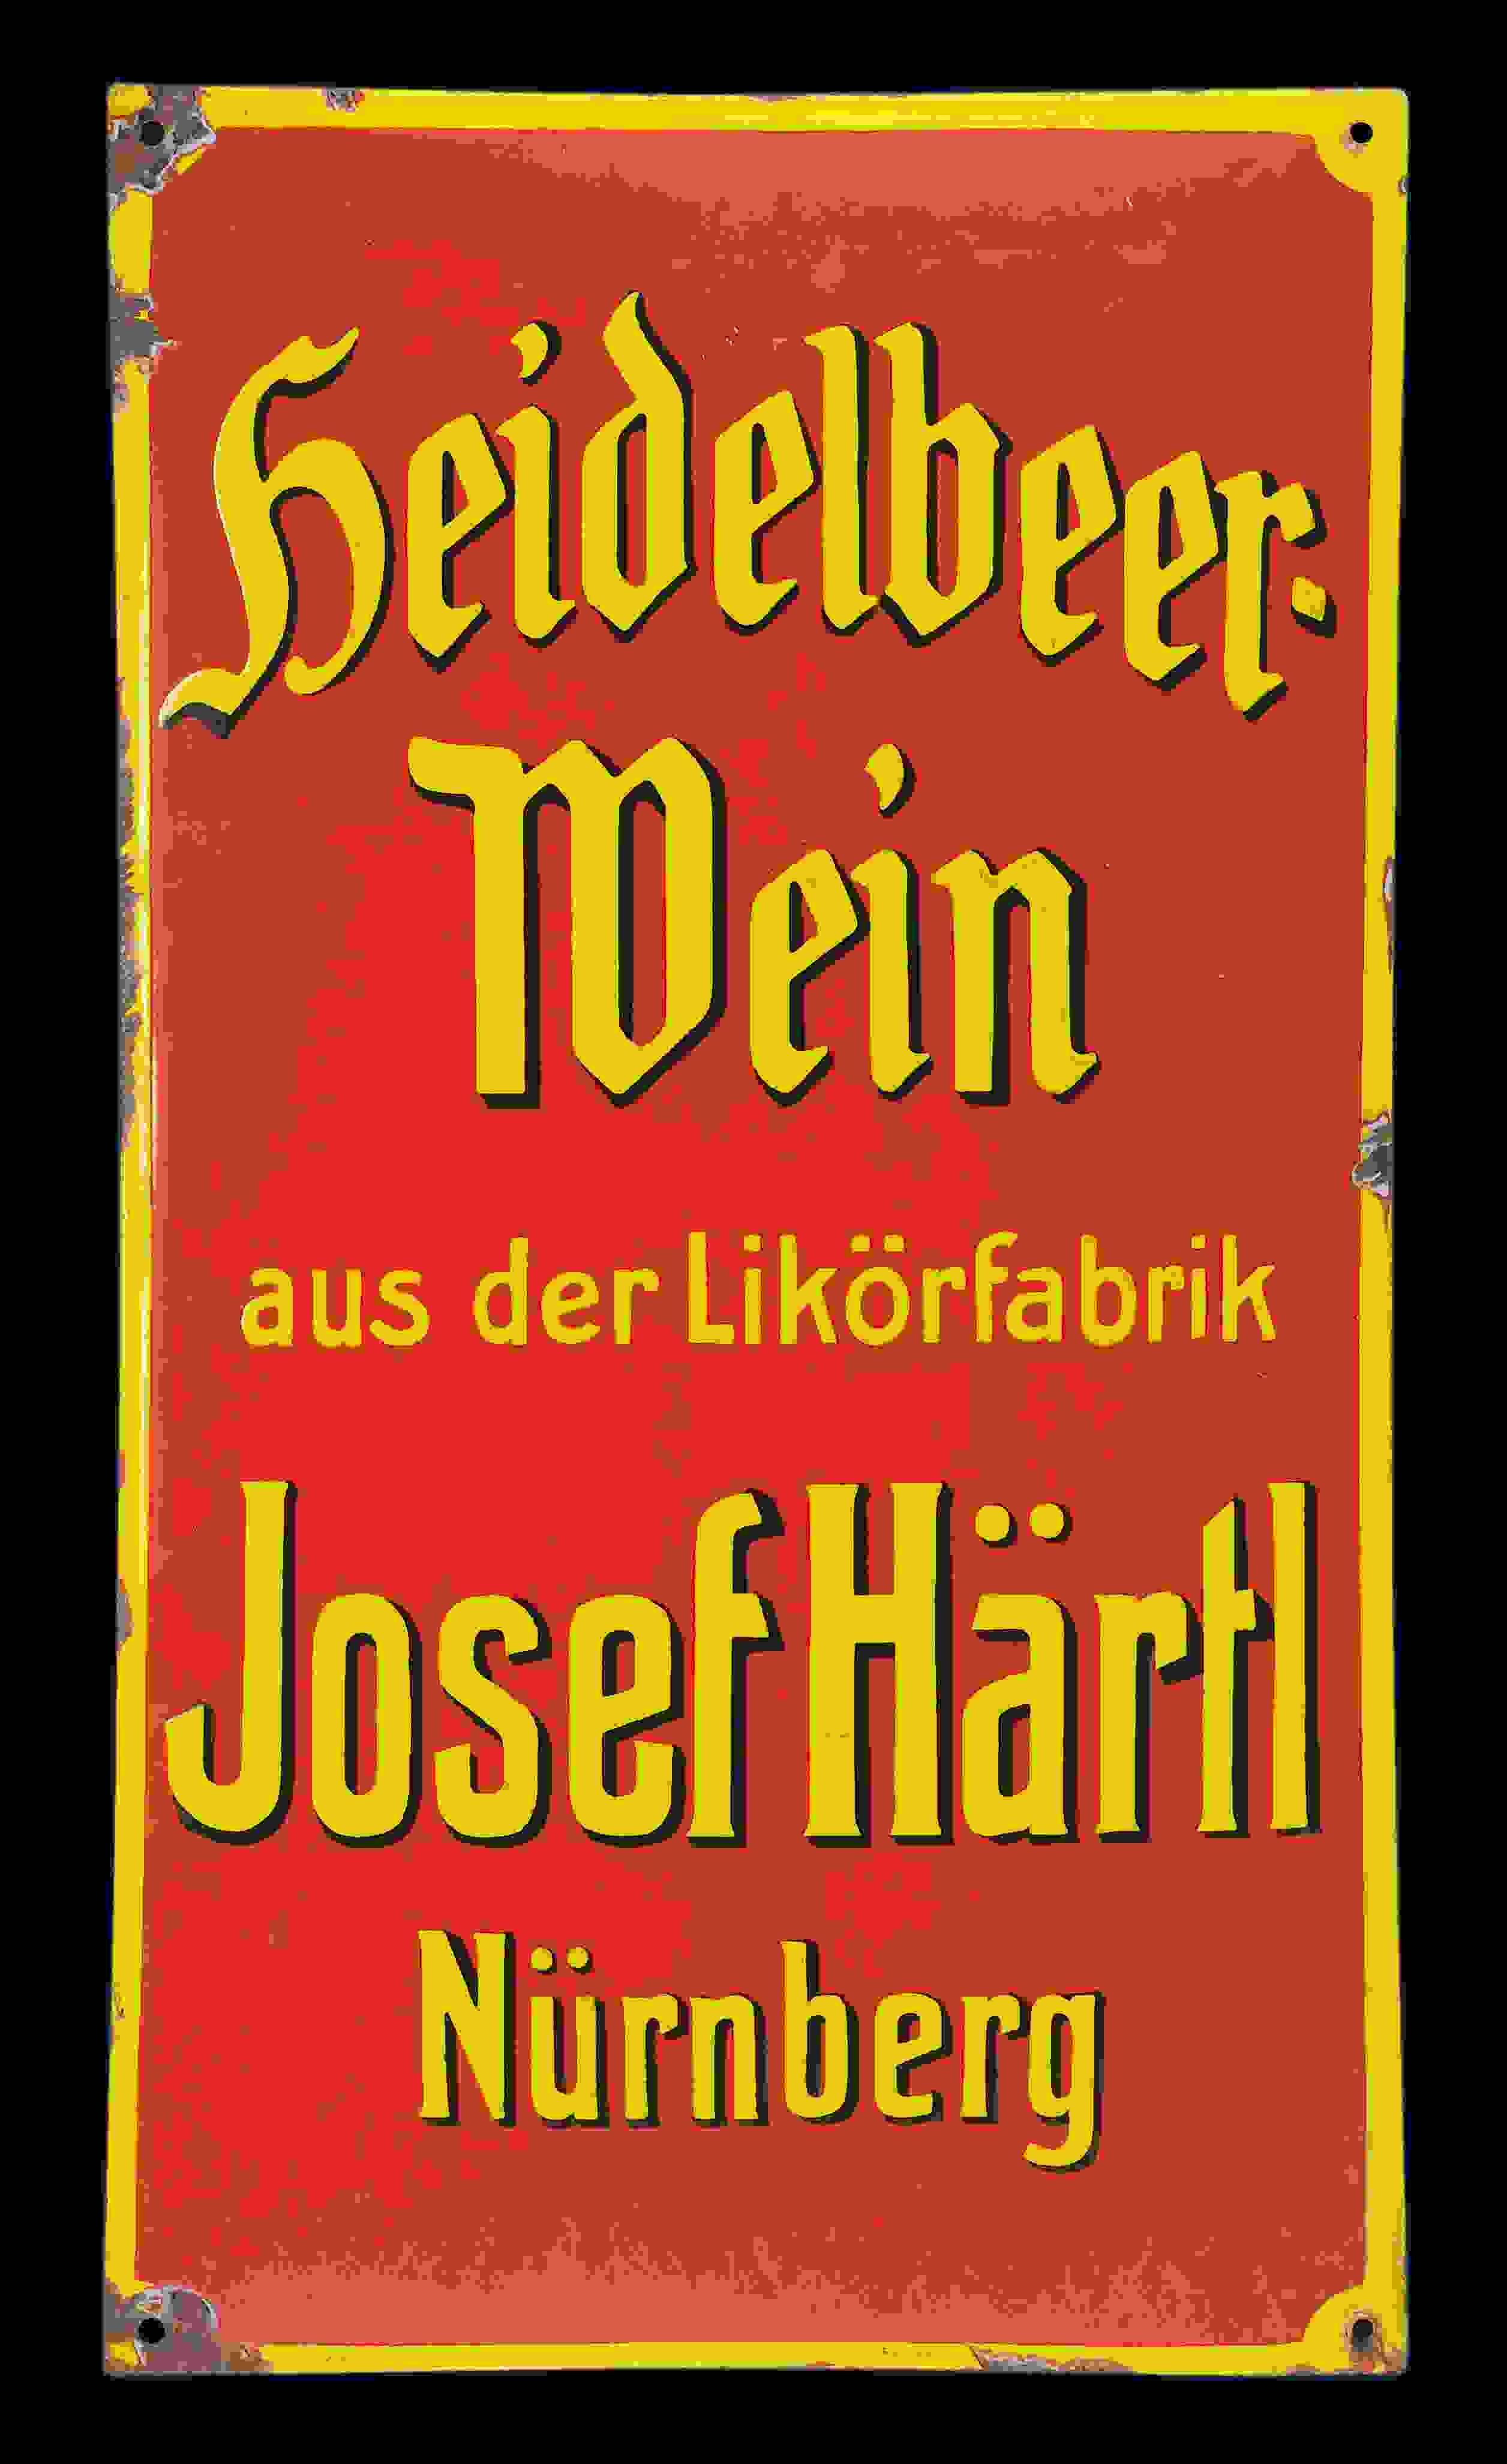 Heidelbeer-Wein Josef Härtl 